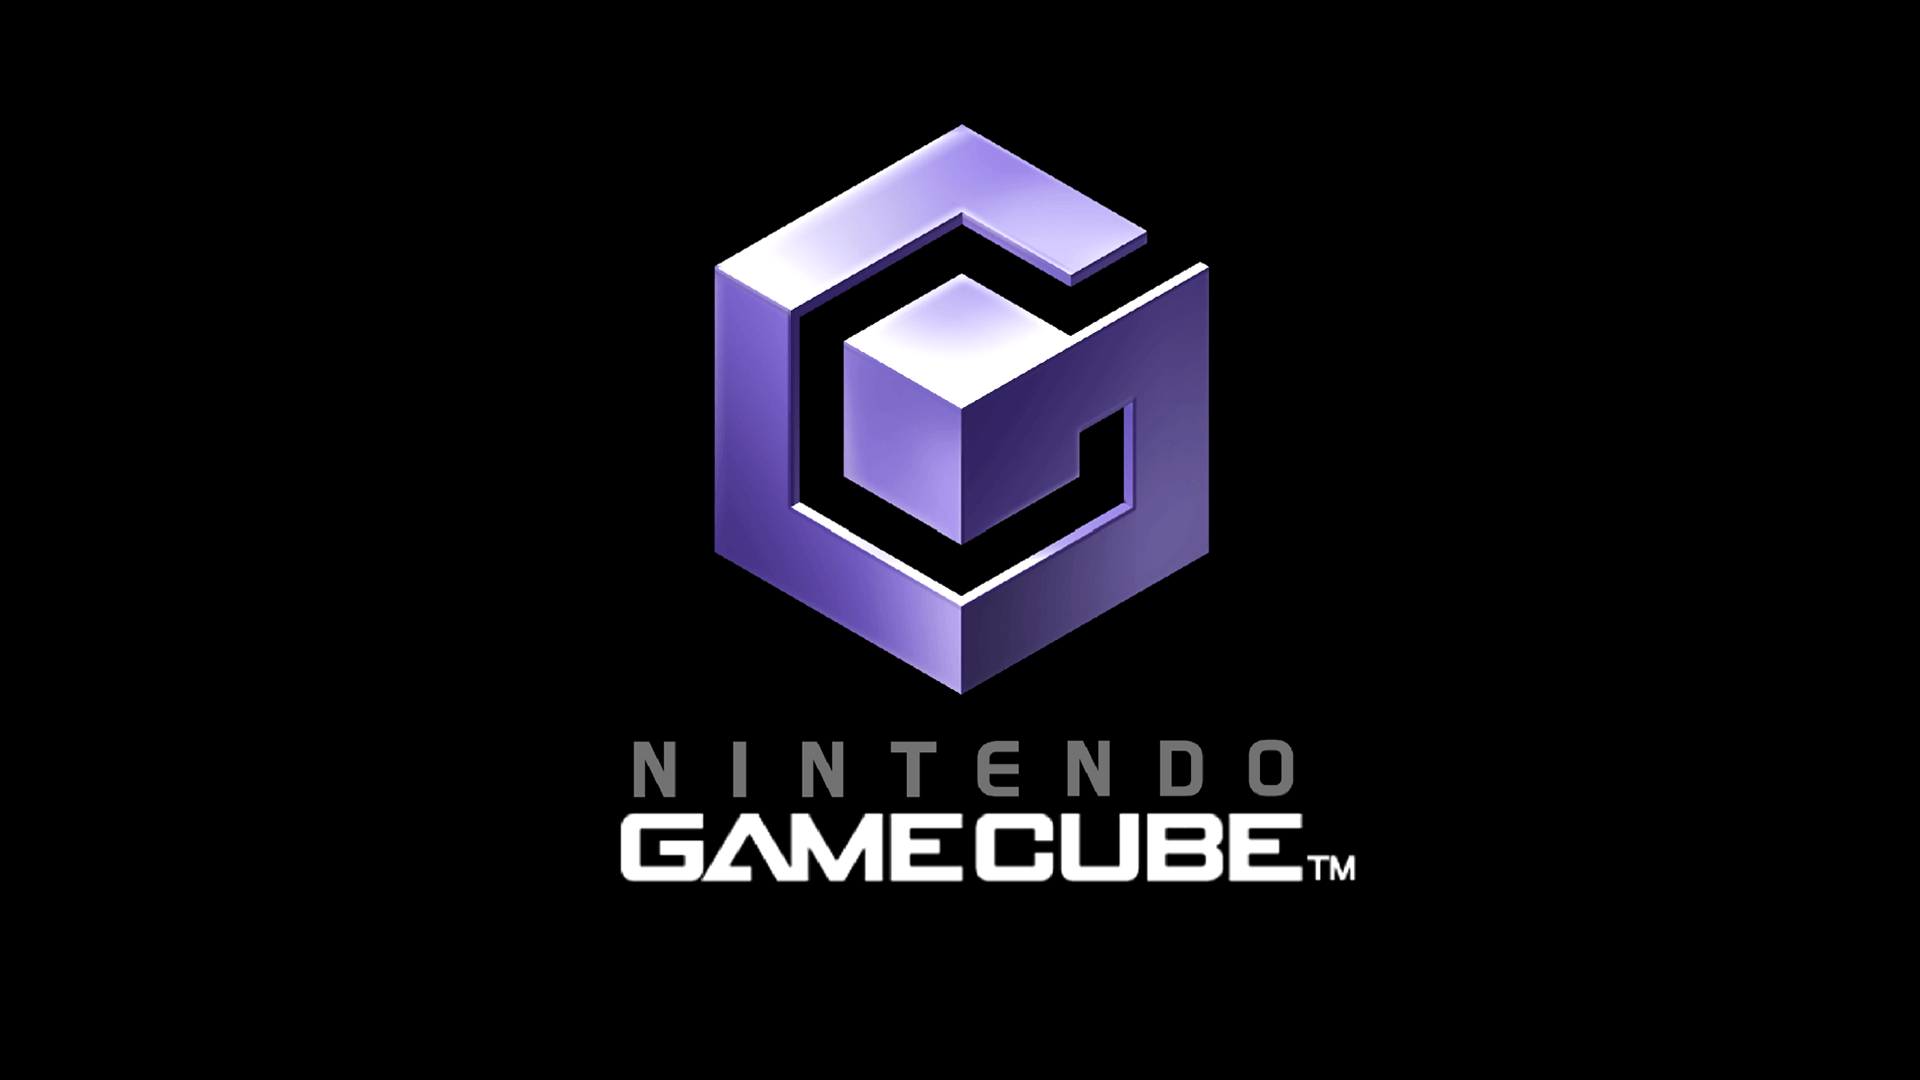 GameCube Logo - Image - Nintendo GameCube logo.png | Logopedia | FANDOM powered by Wikia